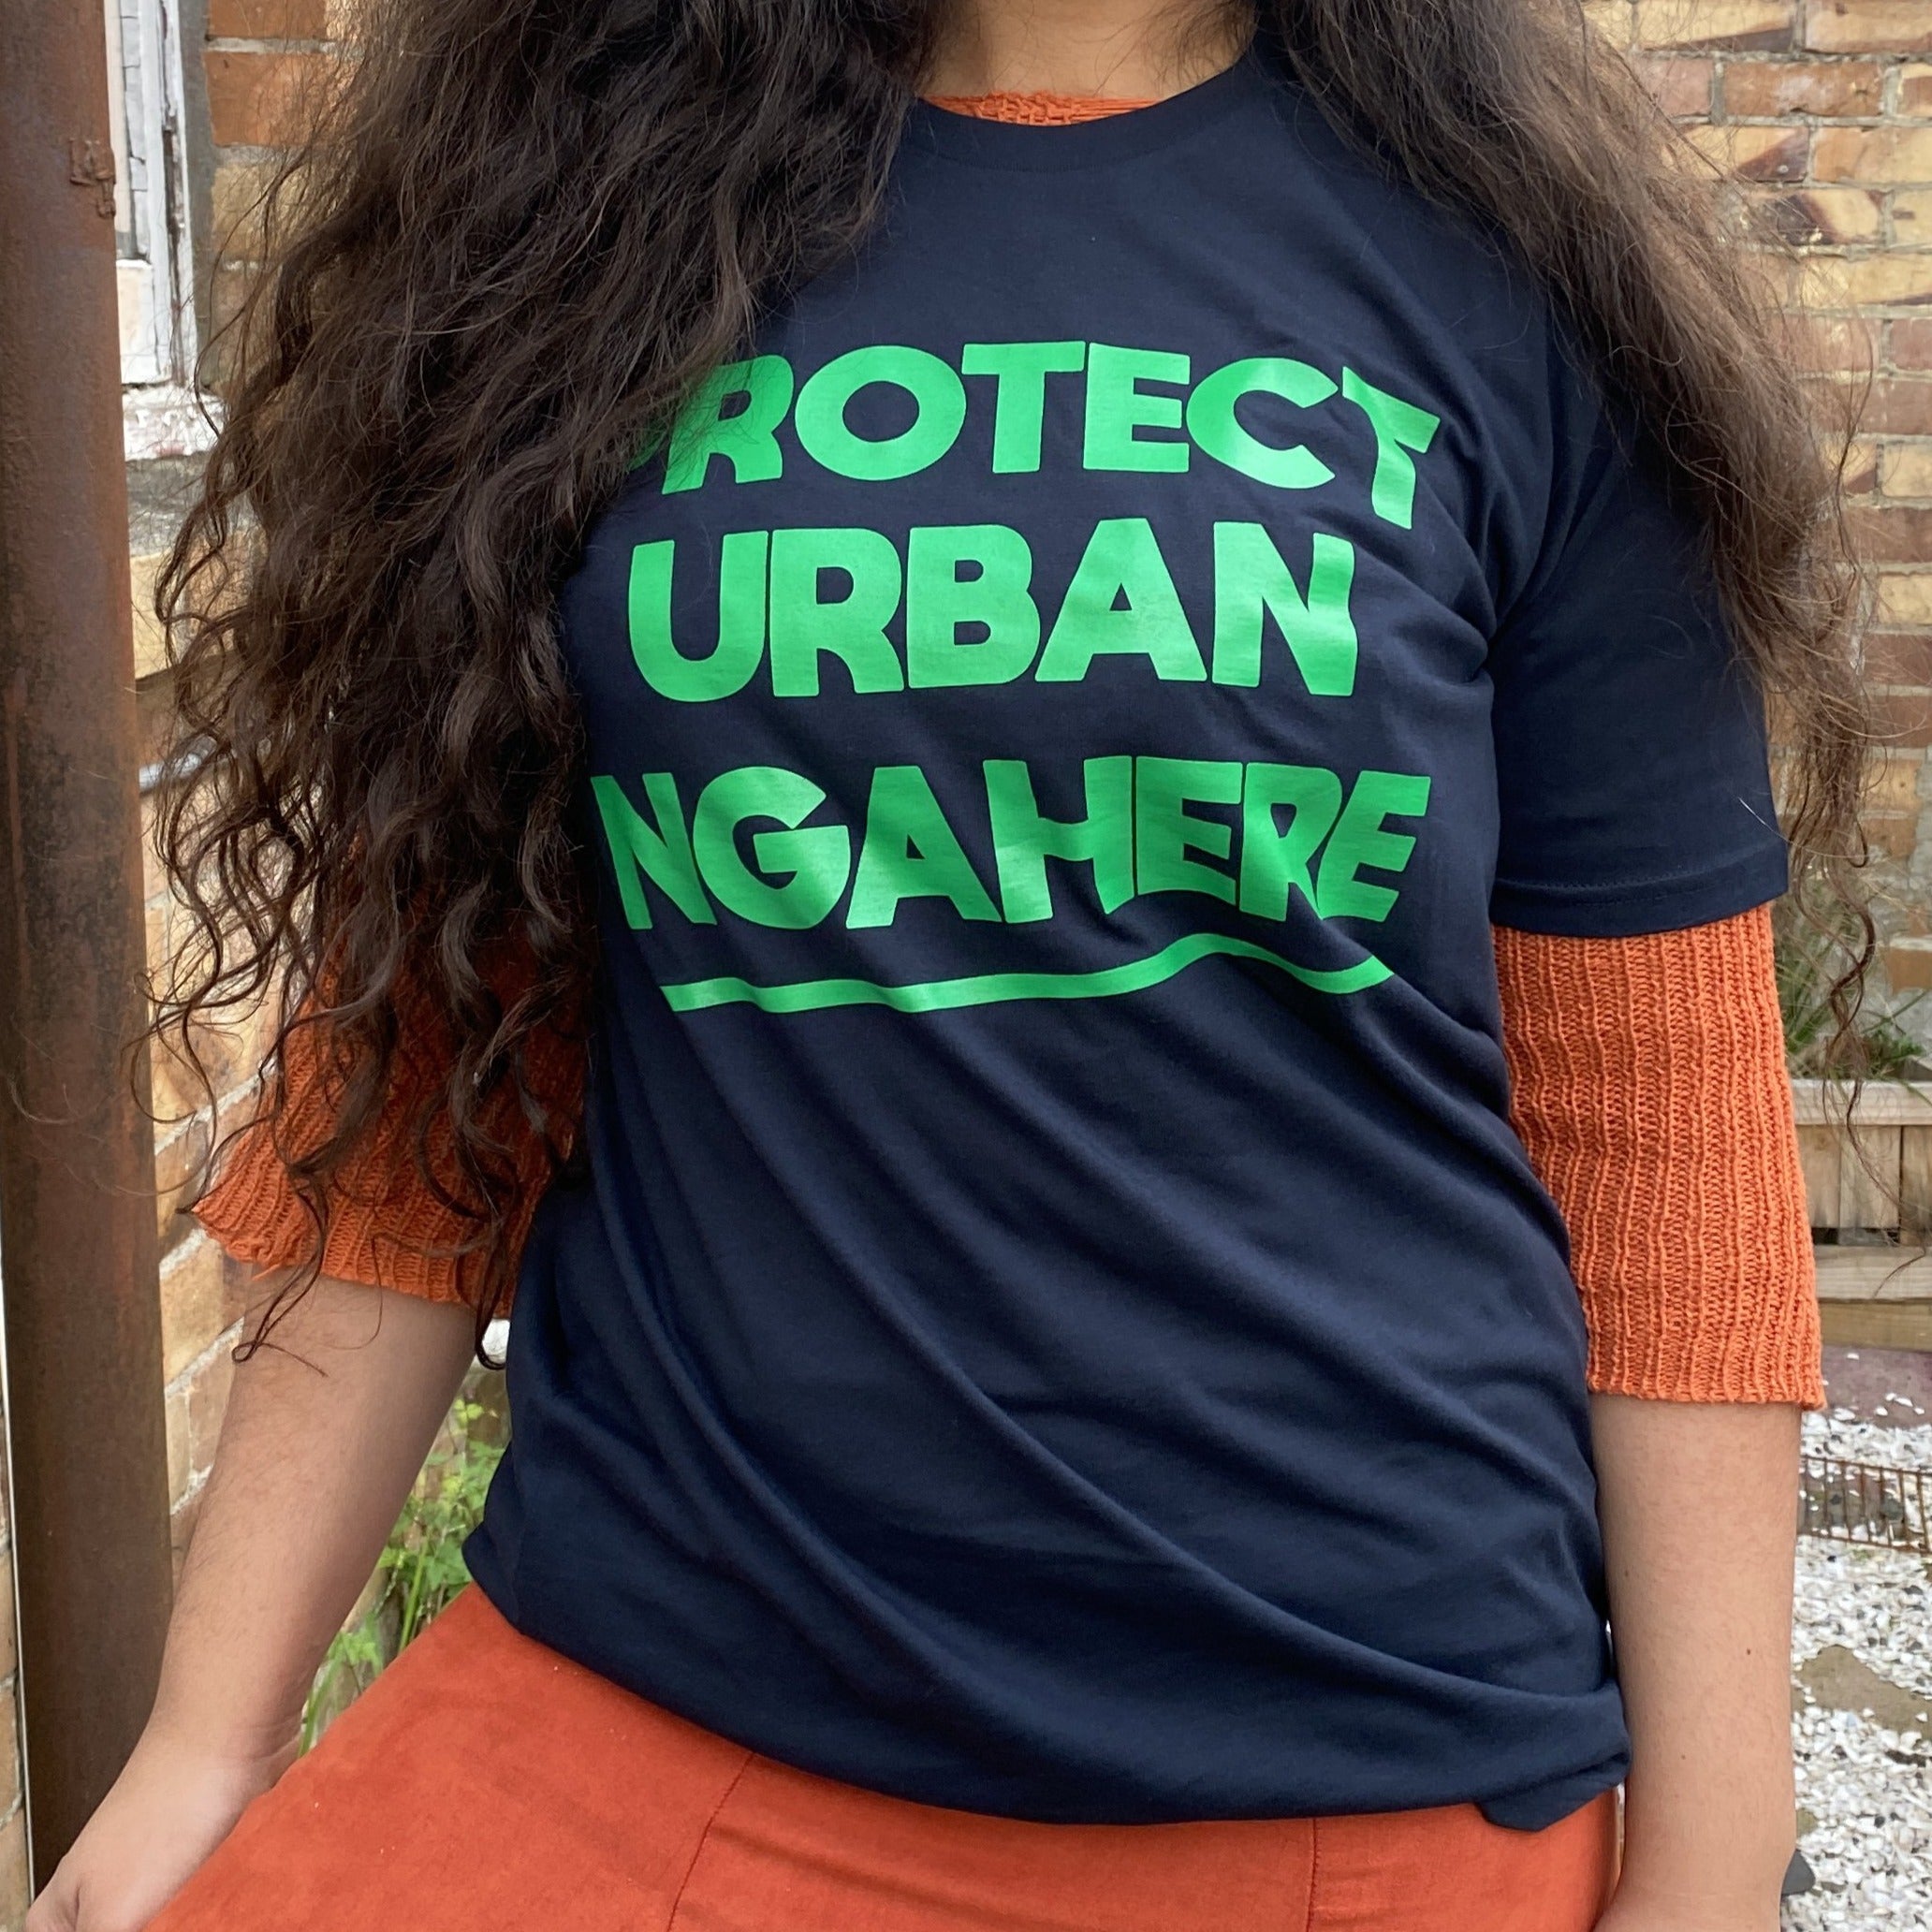 PROTECT URBAN NGAHERE Fundraiser T-Shirts